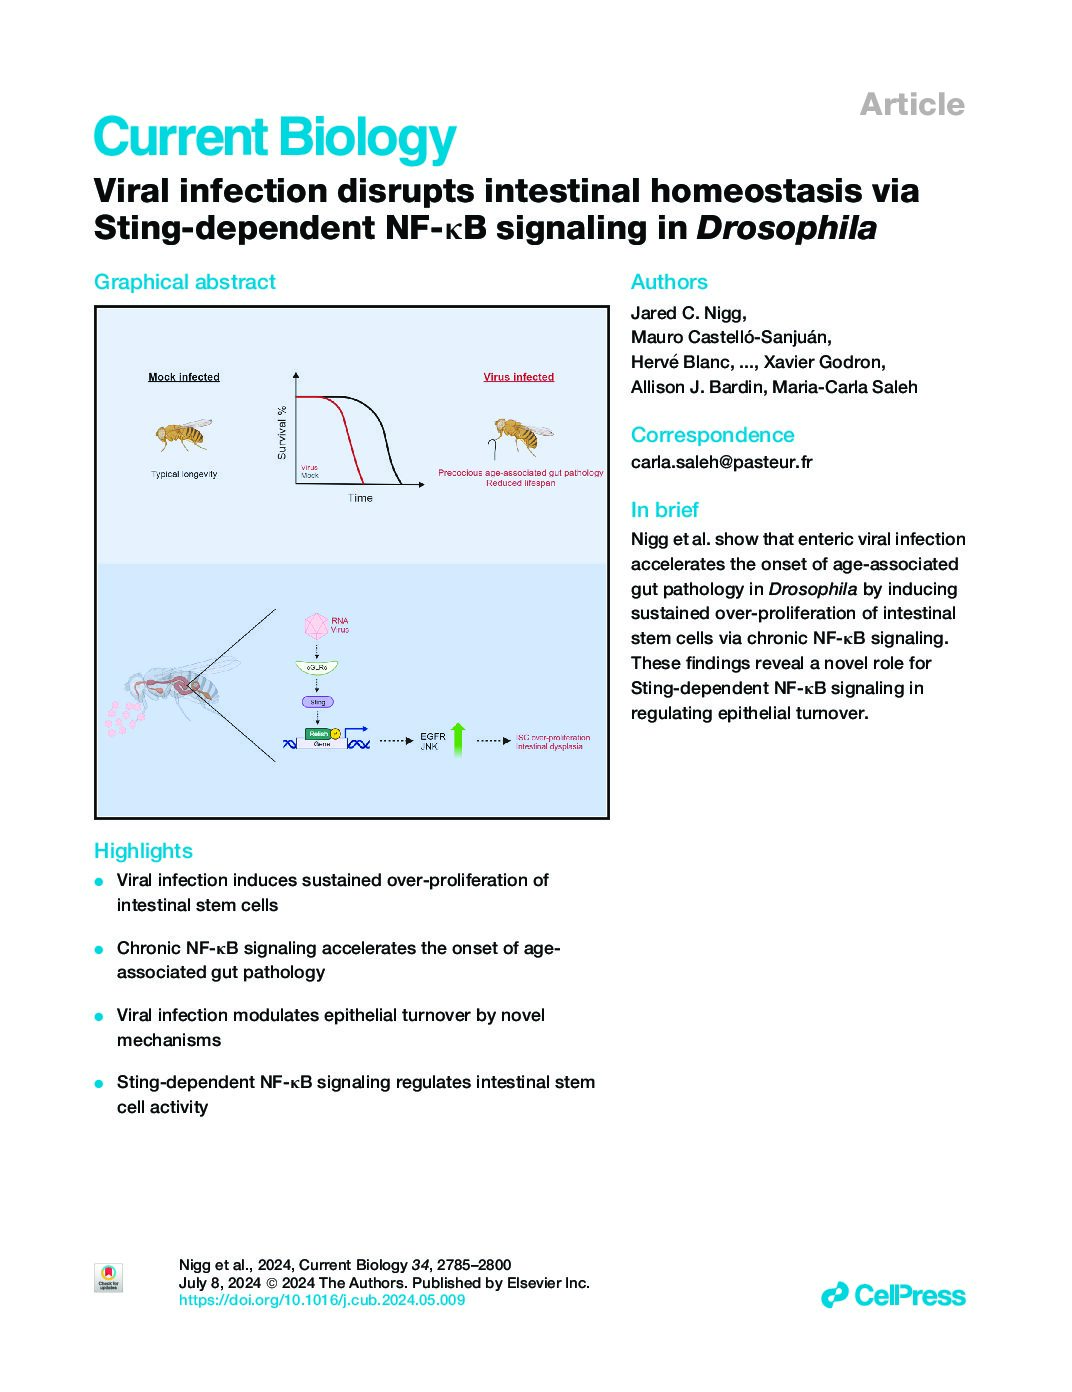 Viral infection disrupts intestinal homeostasis via Sting-dependent NF-κB signaling in Drosophila